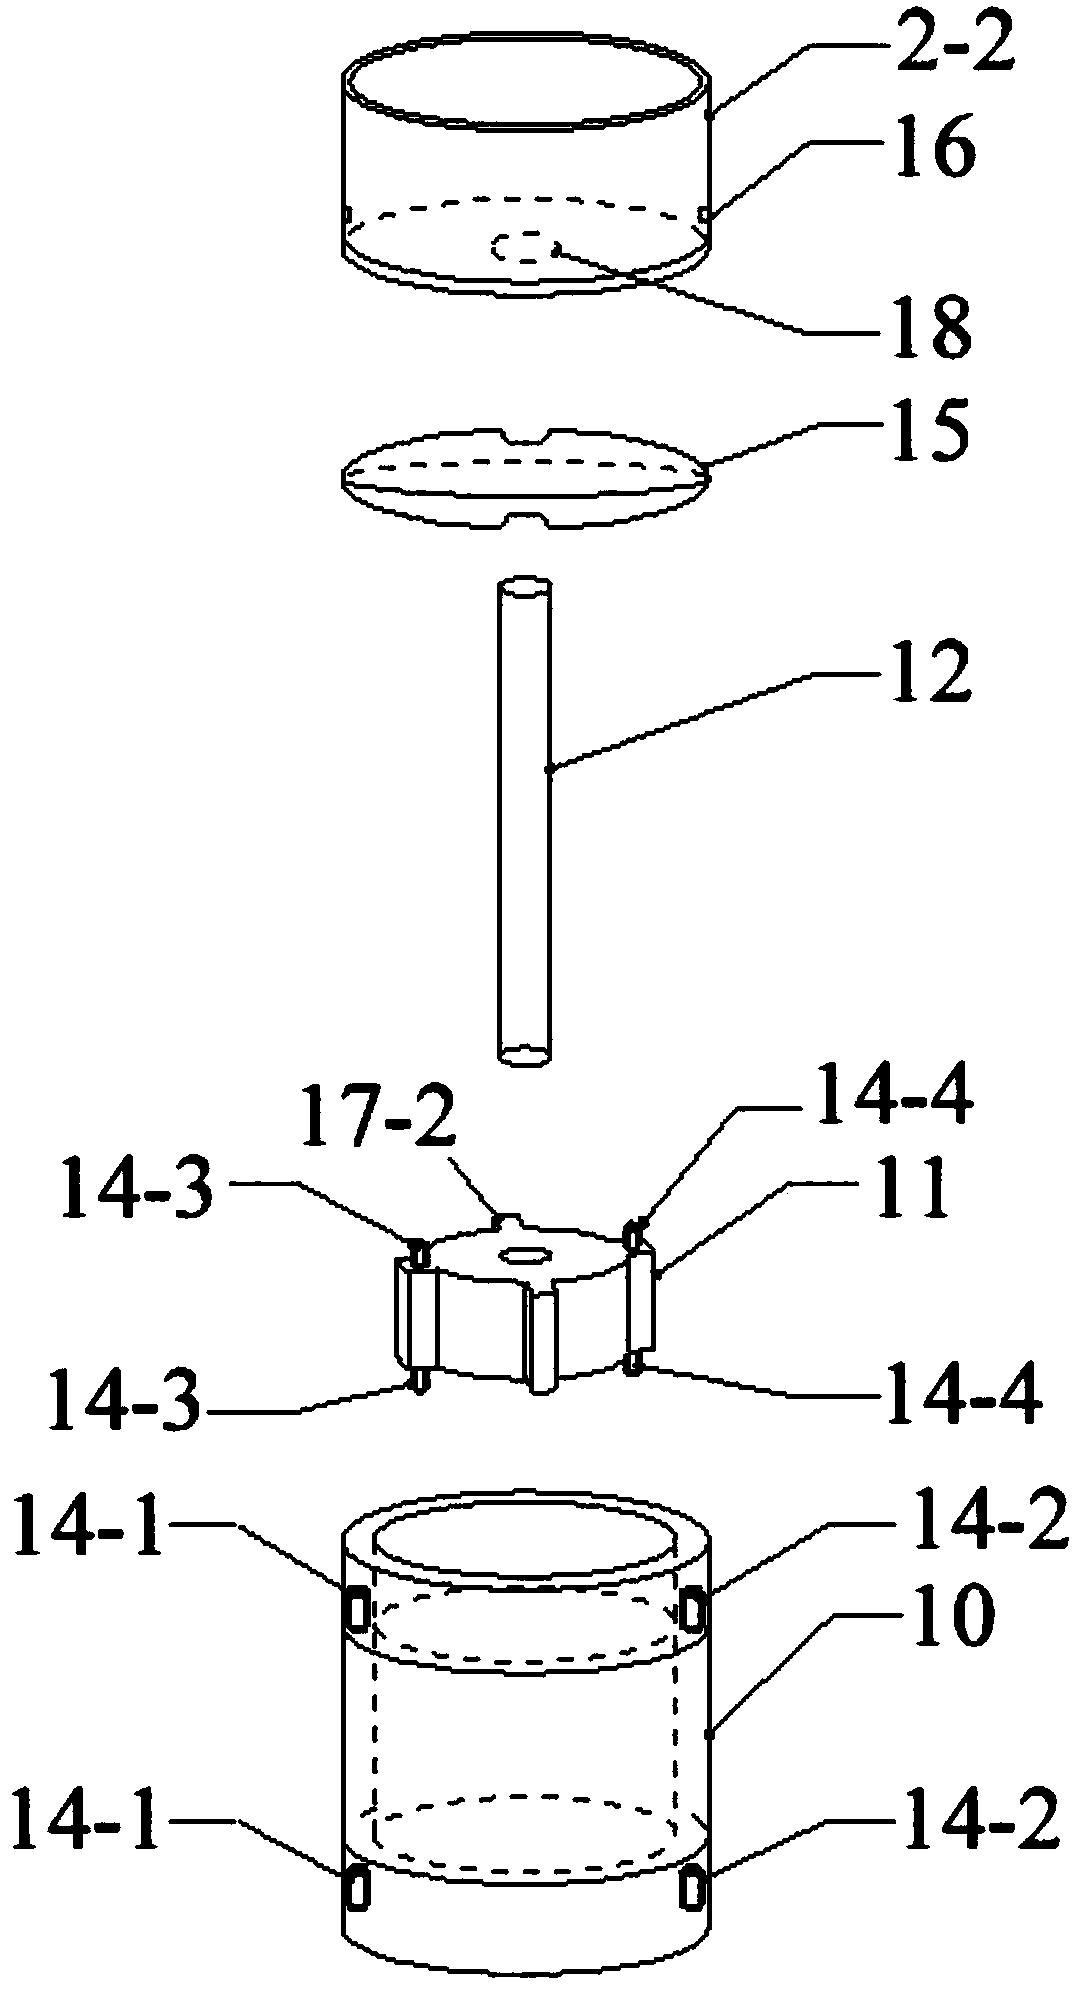 A magnetic levitation centrifugal atomization electronic cigarette